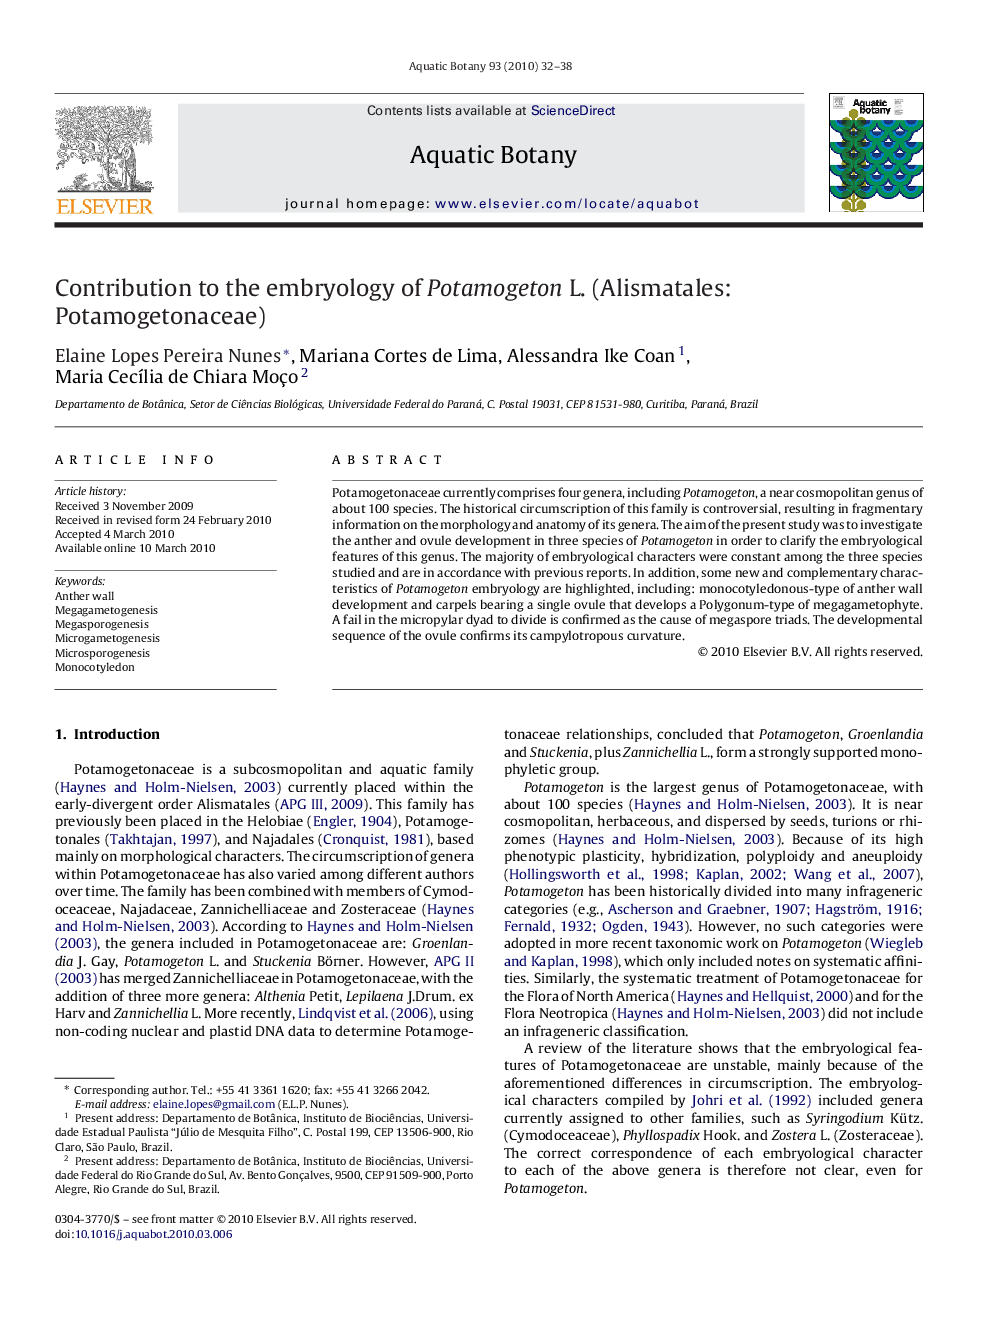 Contribution to the embryology of Potamogeton L. (Alismatales: Potamogetonaceae)